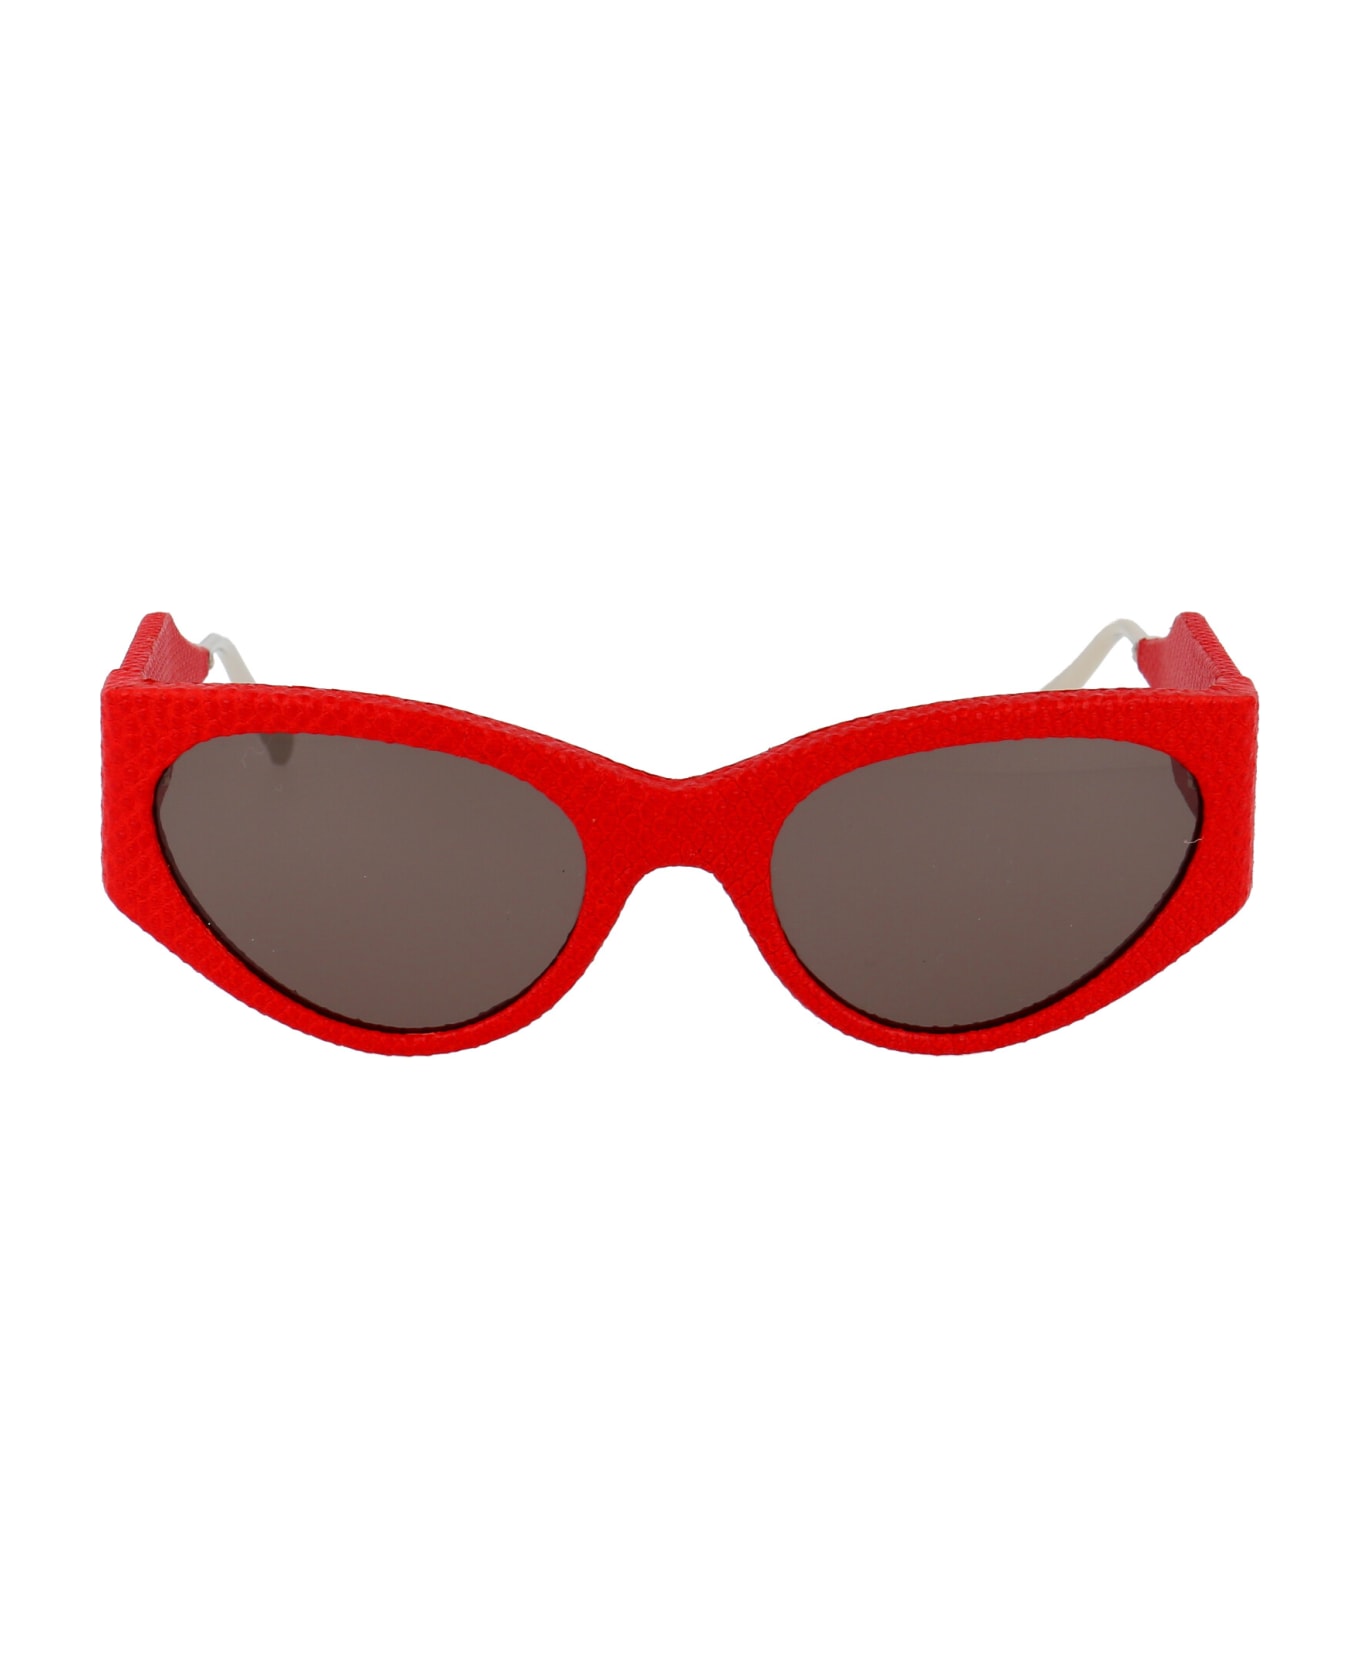 Salvatore Ferragamo Eyewear Sf950sl Sunglasses - 647 RED KARUNG